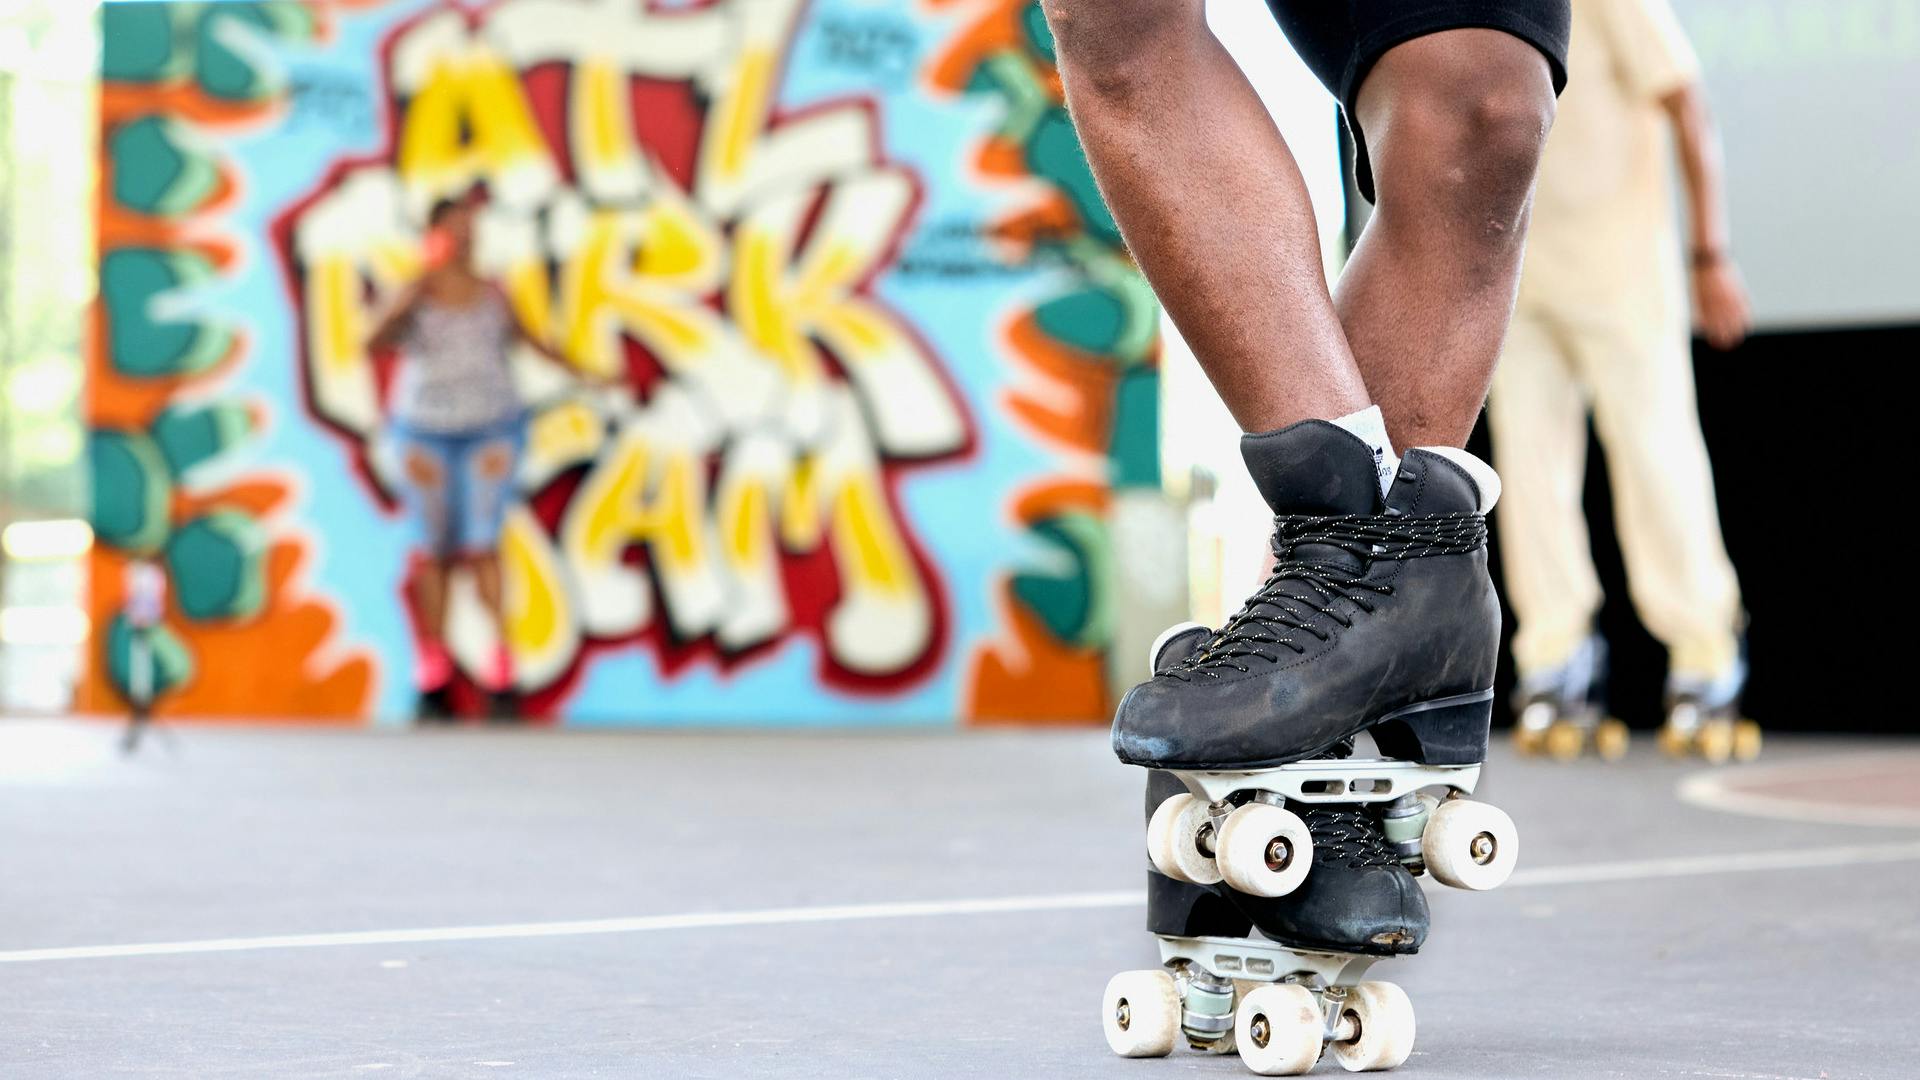 Roller skate feet with ATL Park Jam sign seen behind